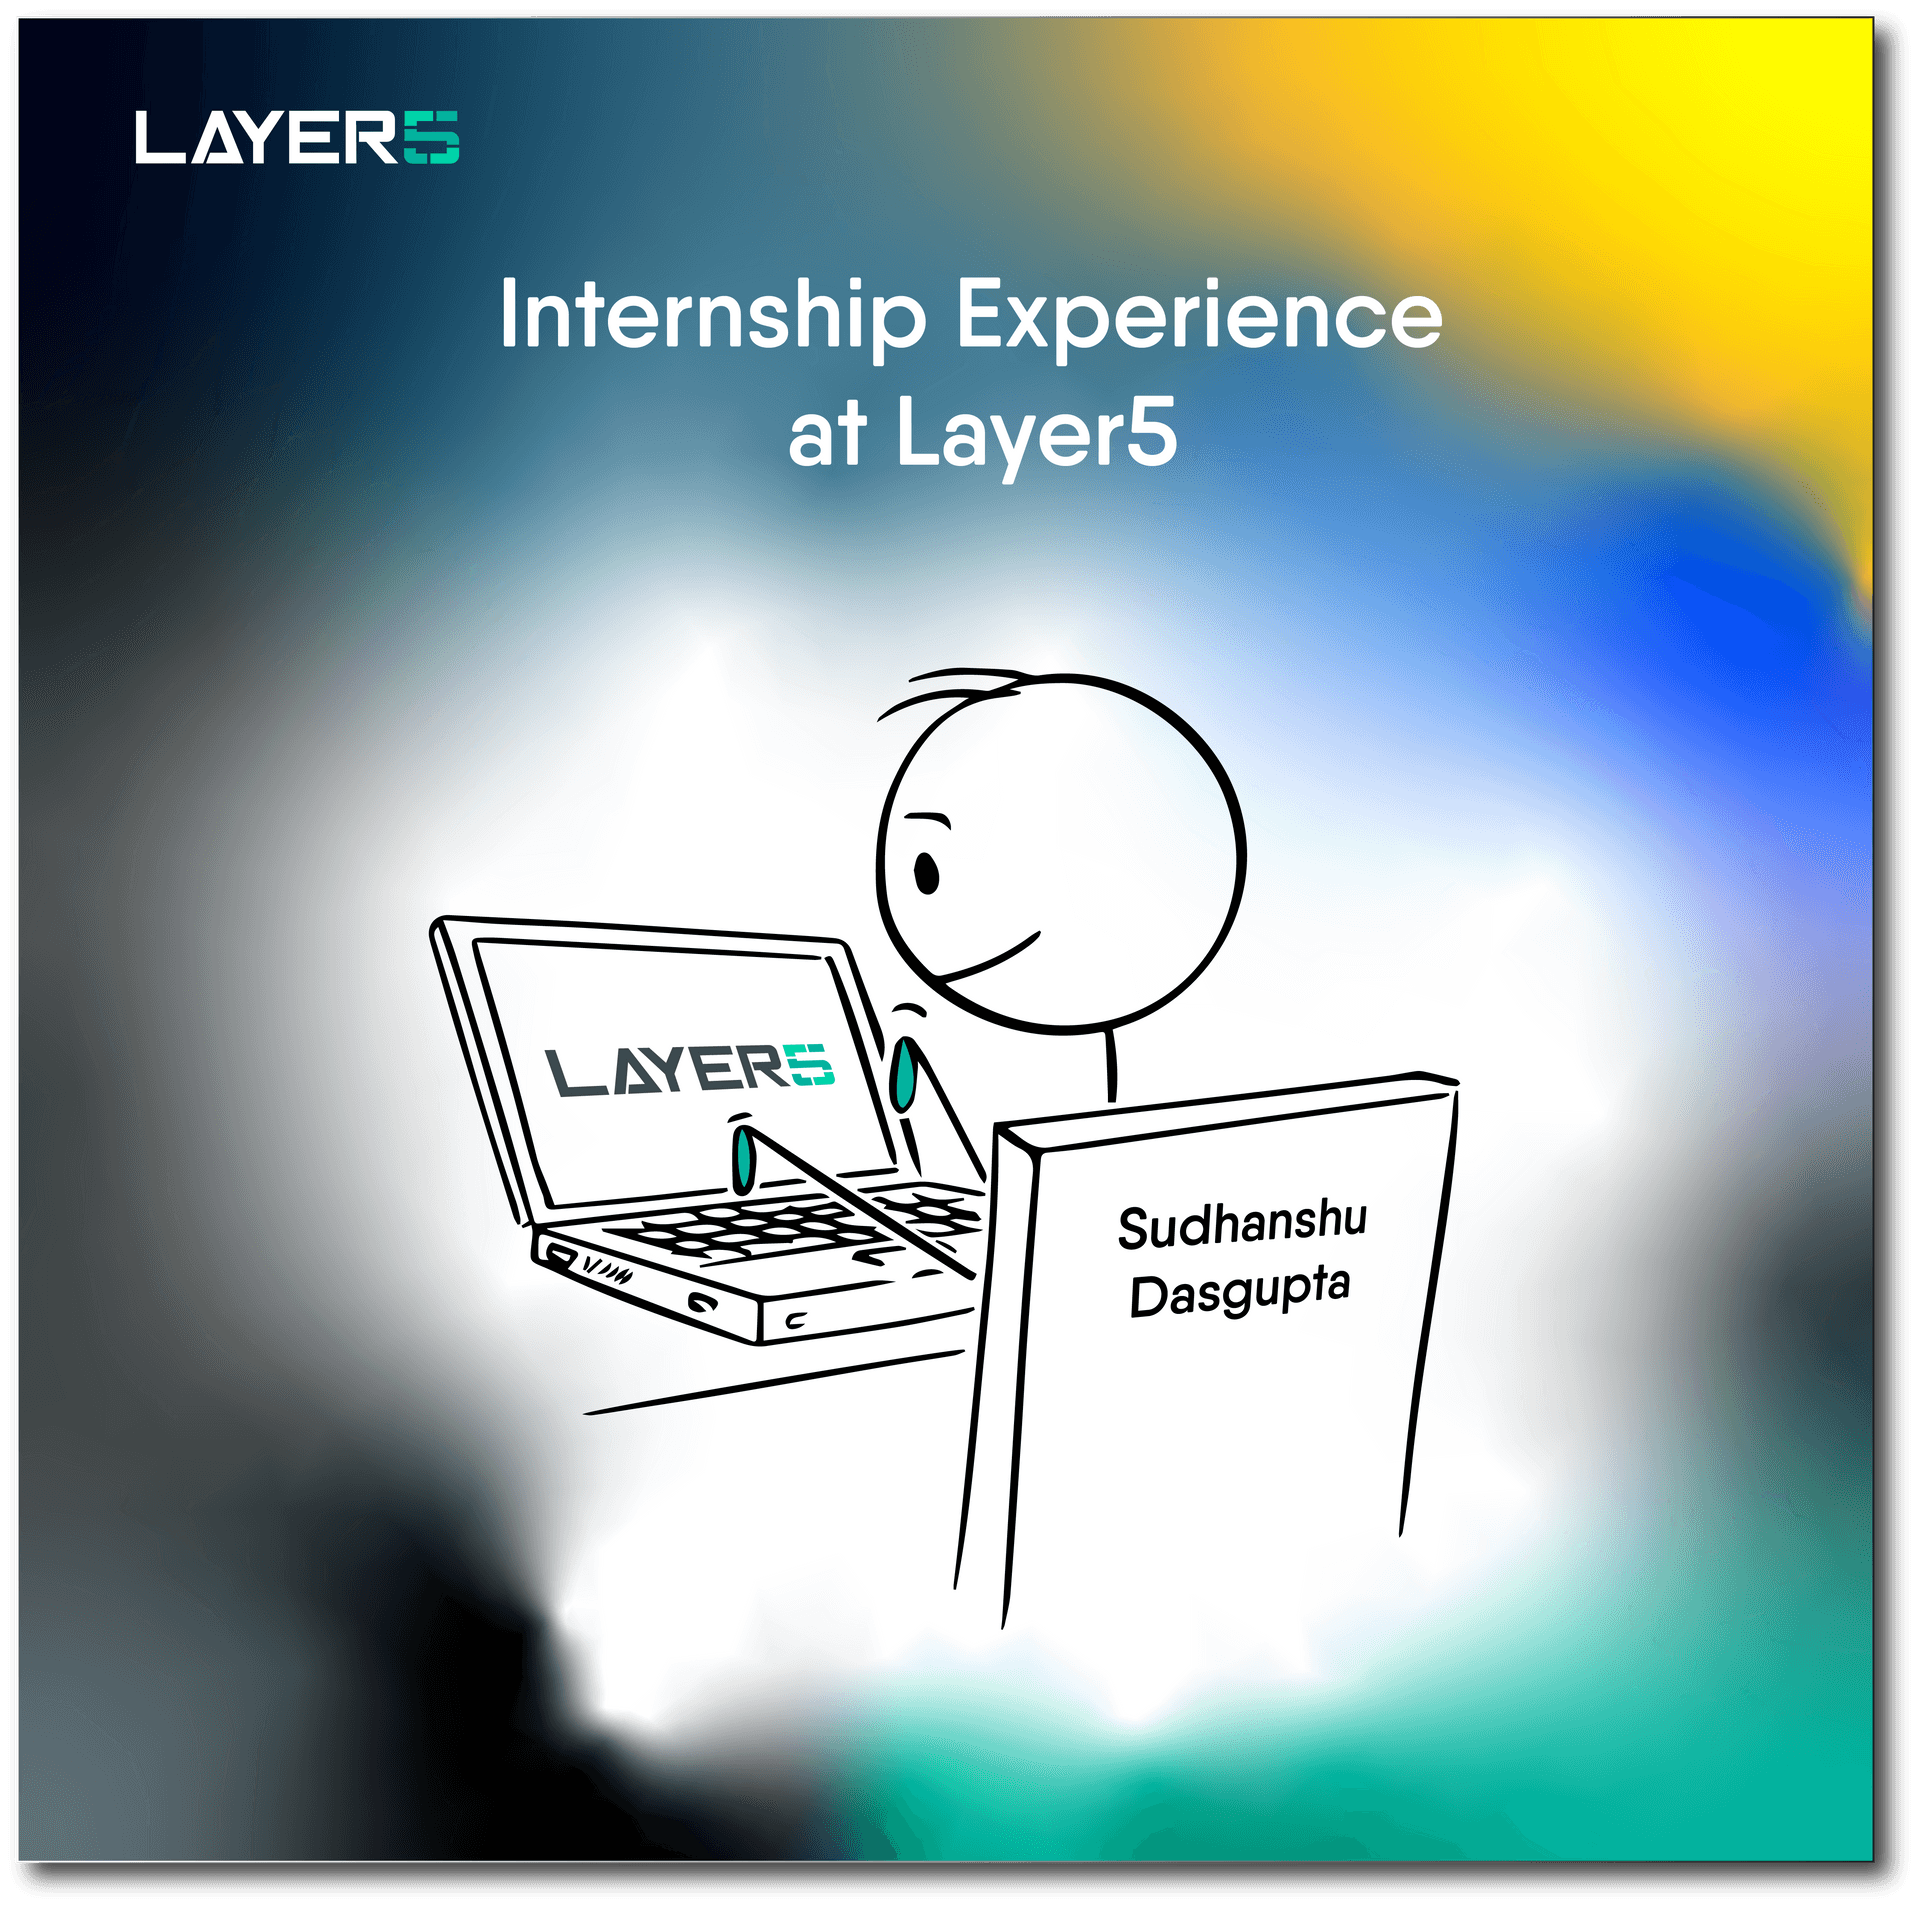 Internship Experience with Layer5 - Sudhanshu Dasgupta